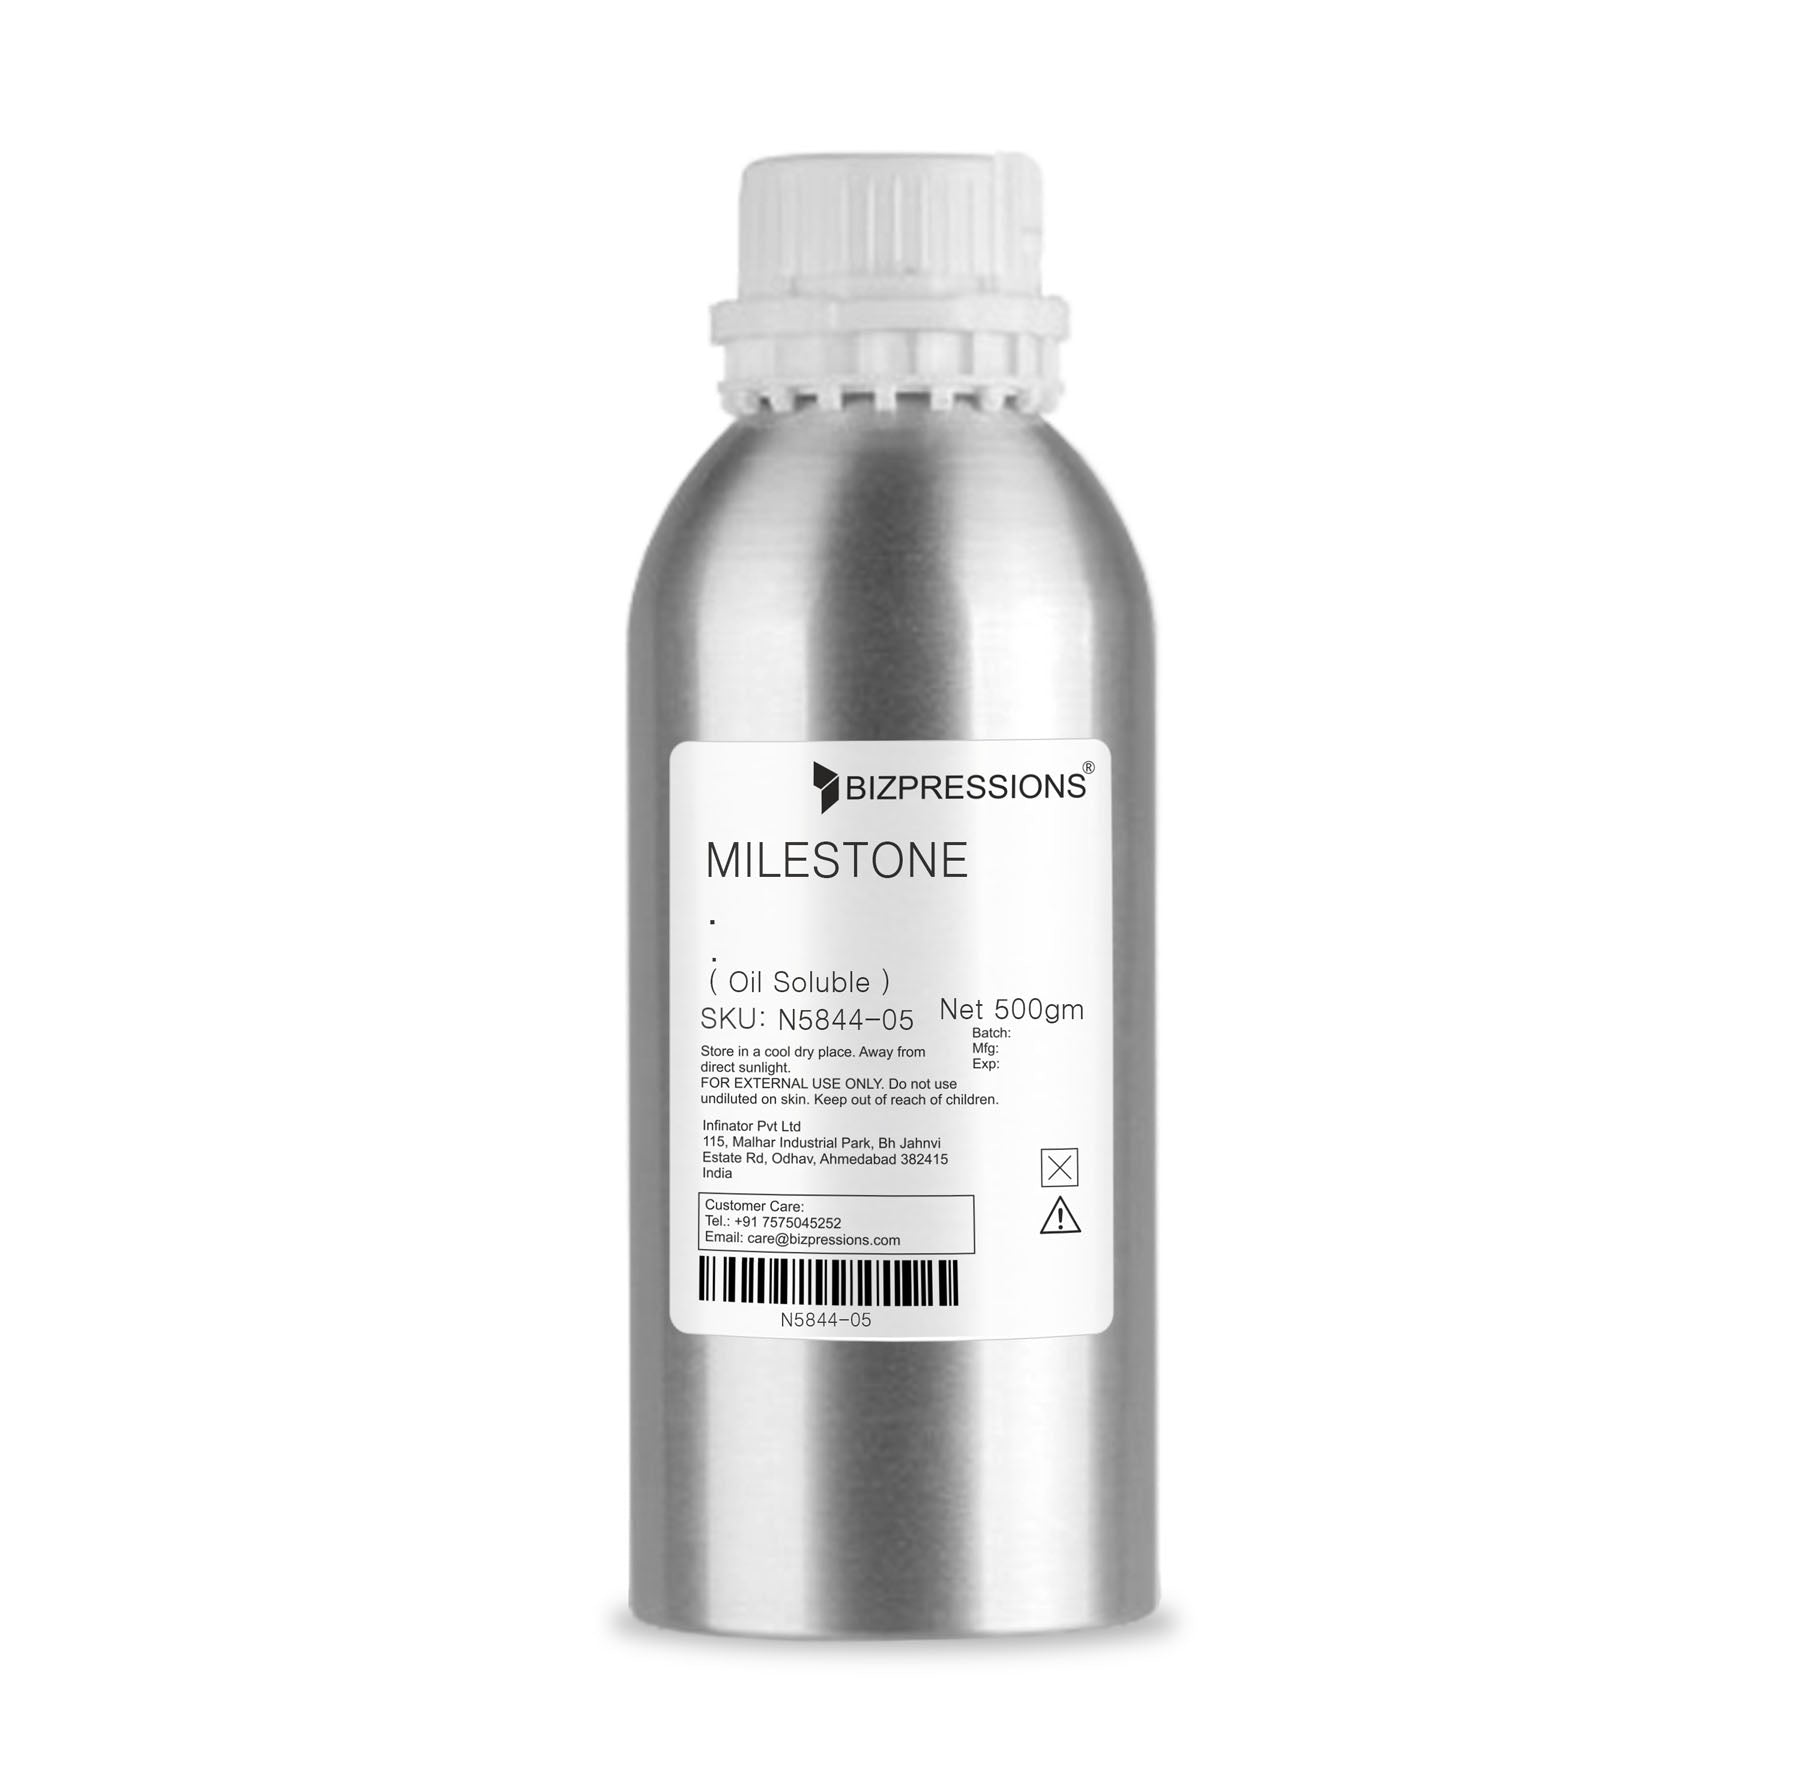 MILESTONE - Fragrance ( Oil Soluble ) - 500 gm